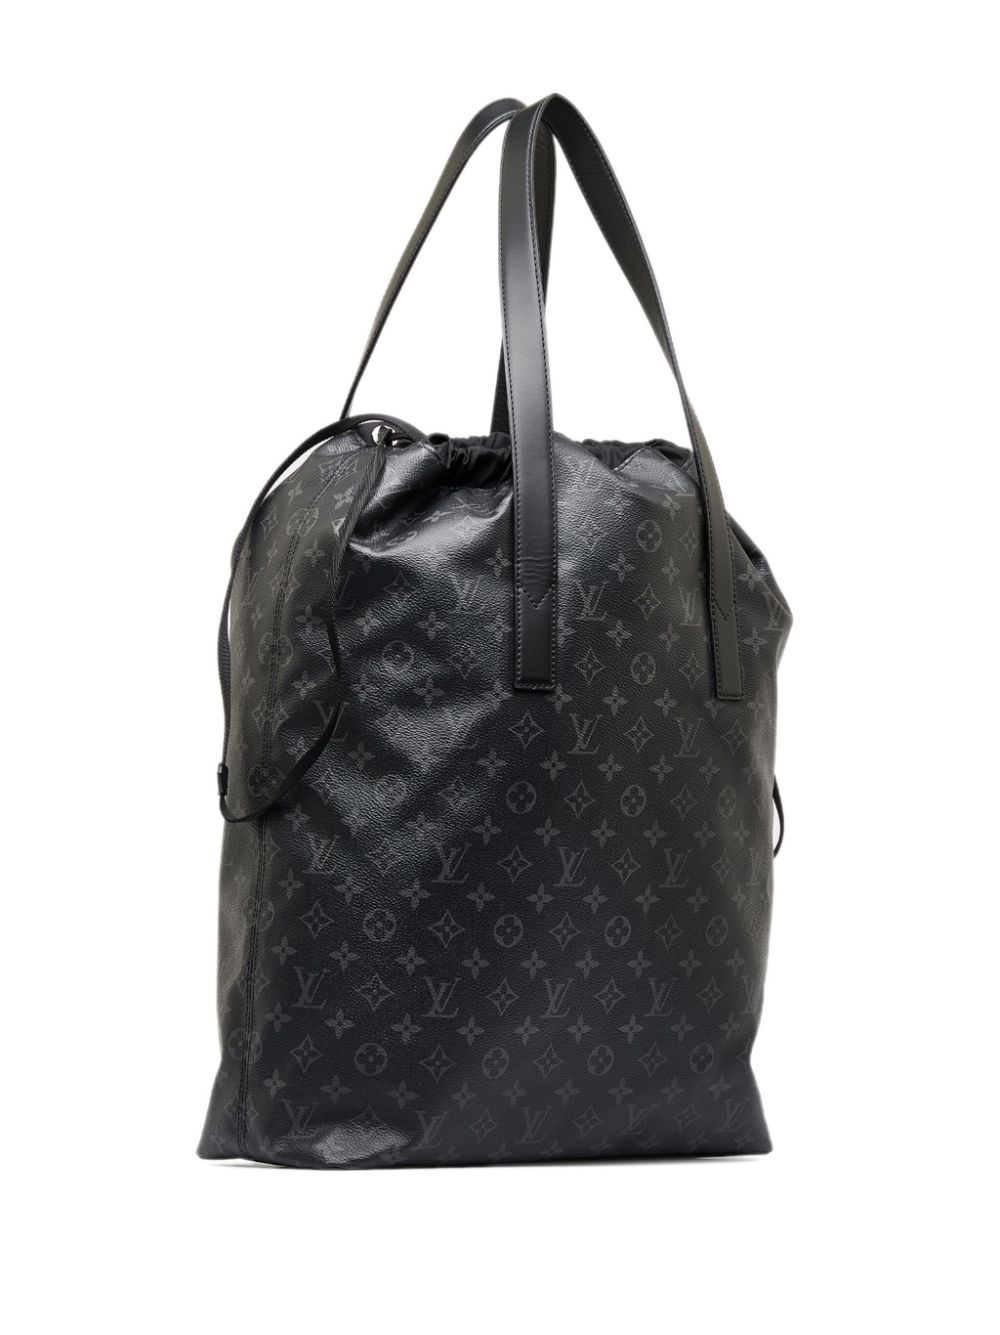 Pre-owned Louis Vuitton 2018 Monogram Eclipse Cabas Light Tote Bag